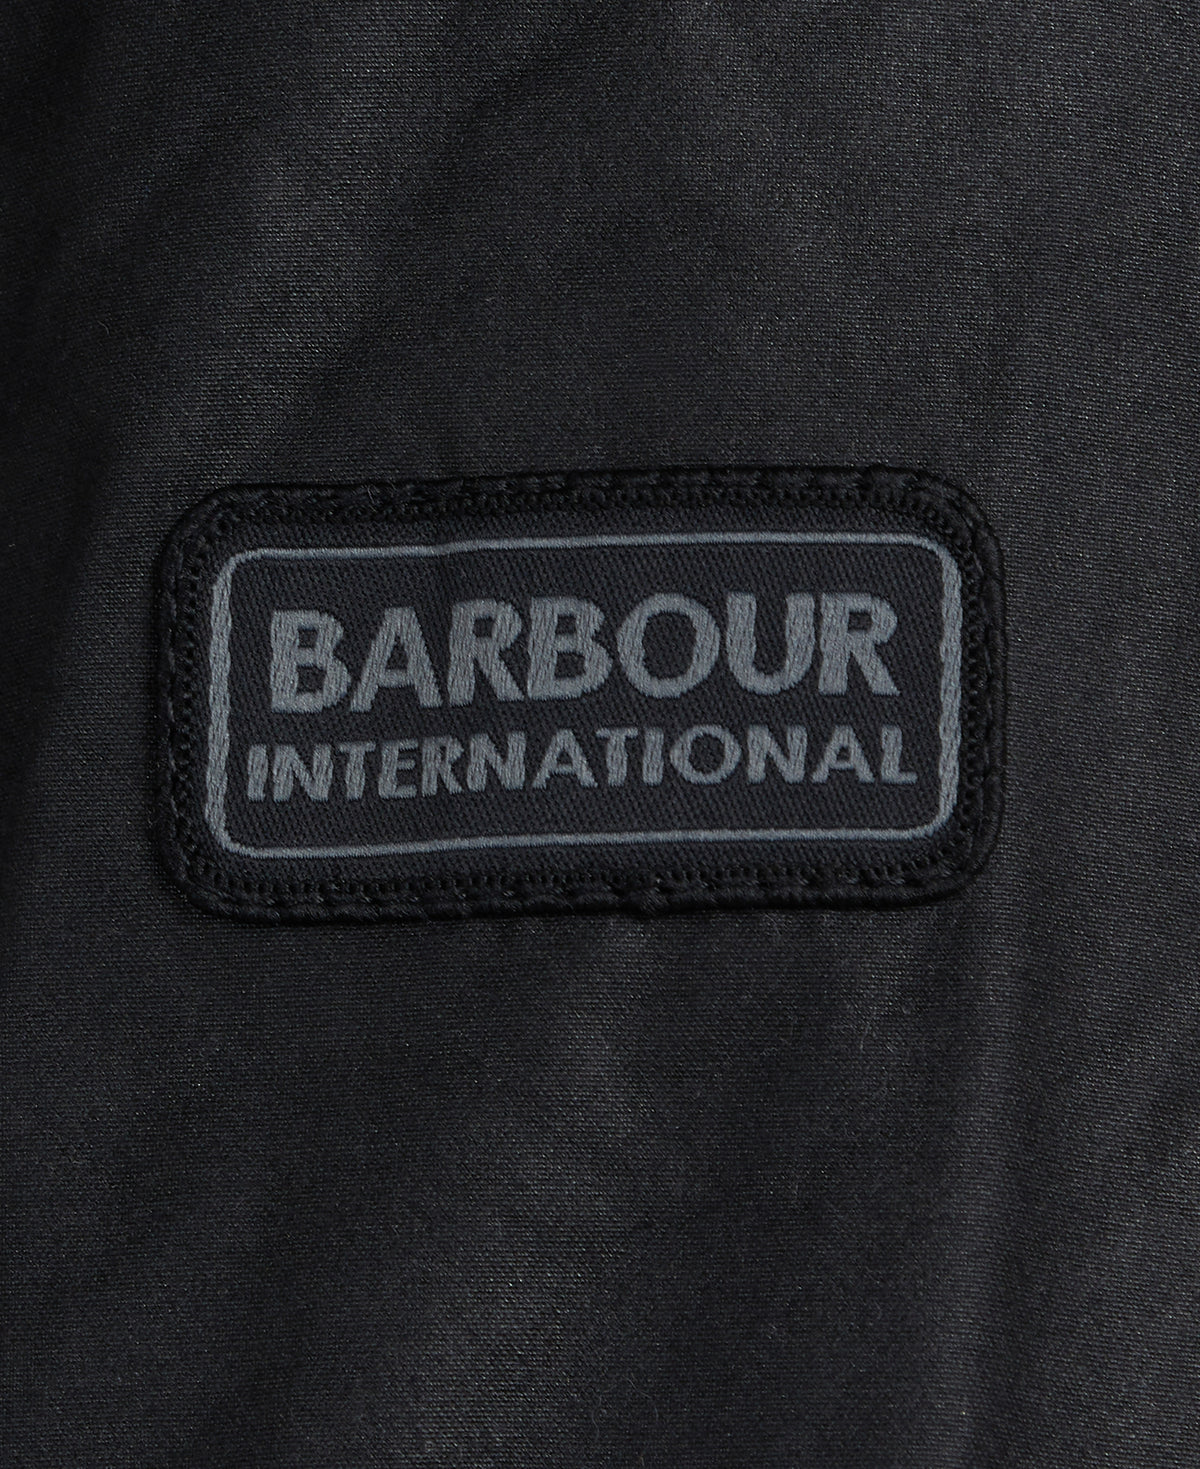 Barbour B.intl Duke Wax Jacket Bk91